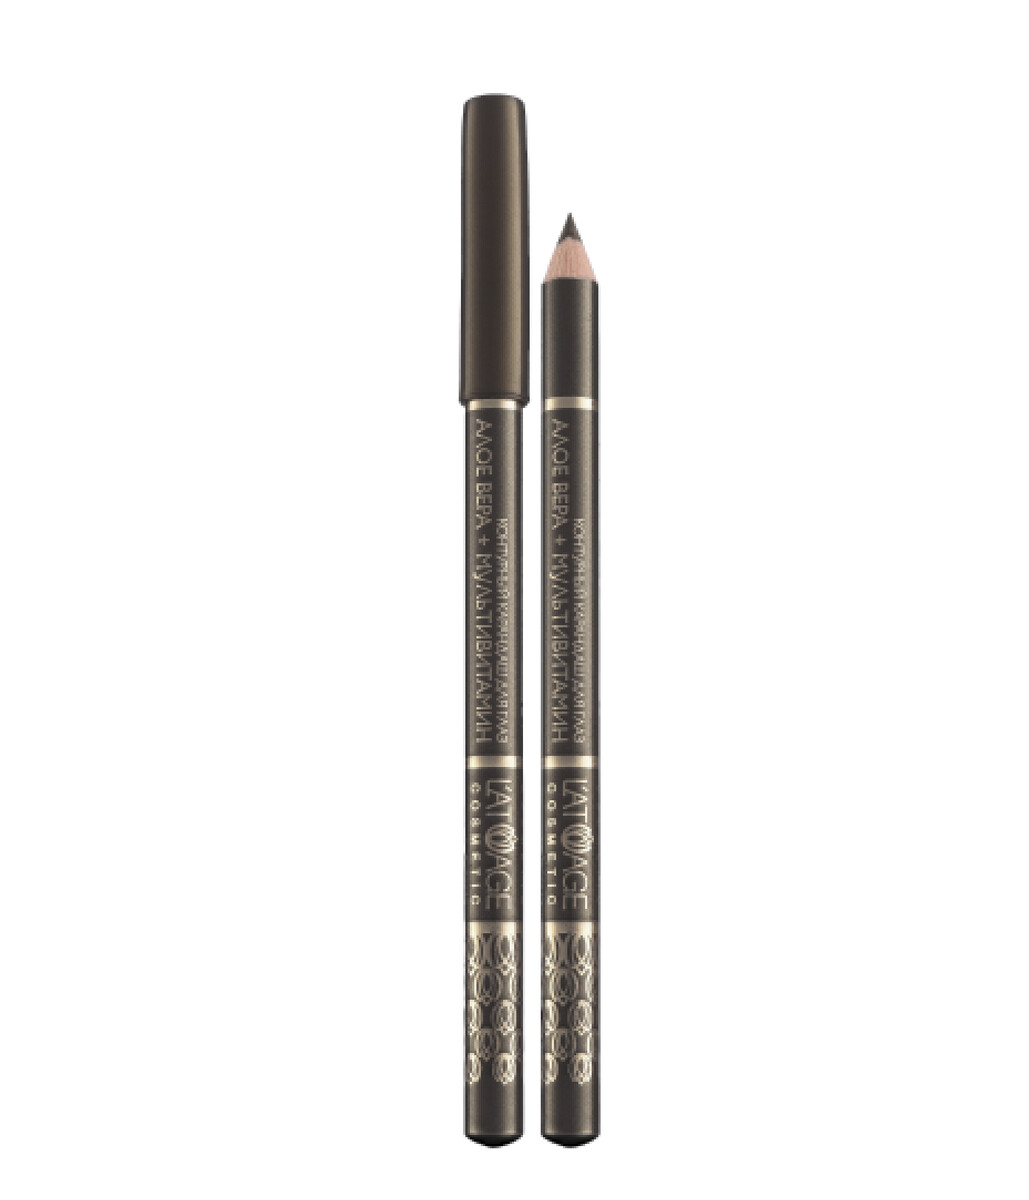 Контурный карандаш для глаз latuage cosmetic №41 (шоколадный) контурный карандаш для бровей latuage cosmetic 06 тауп